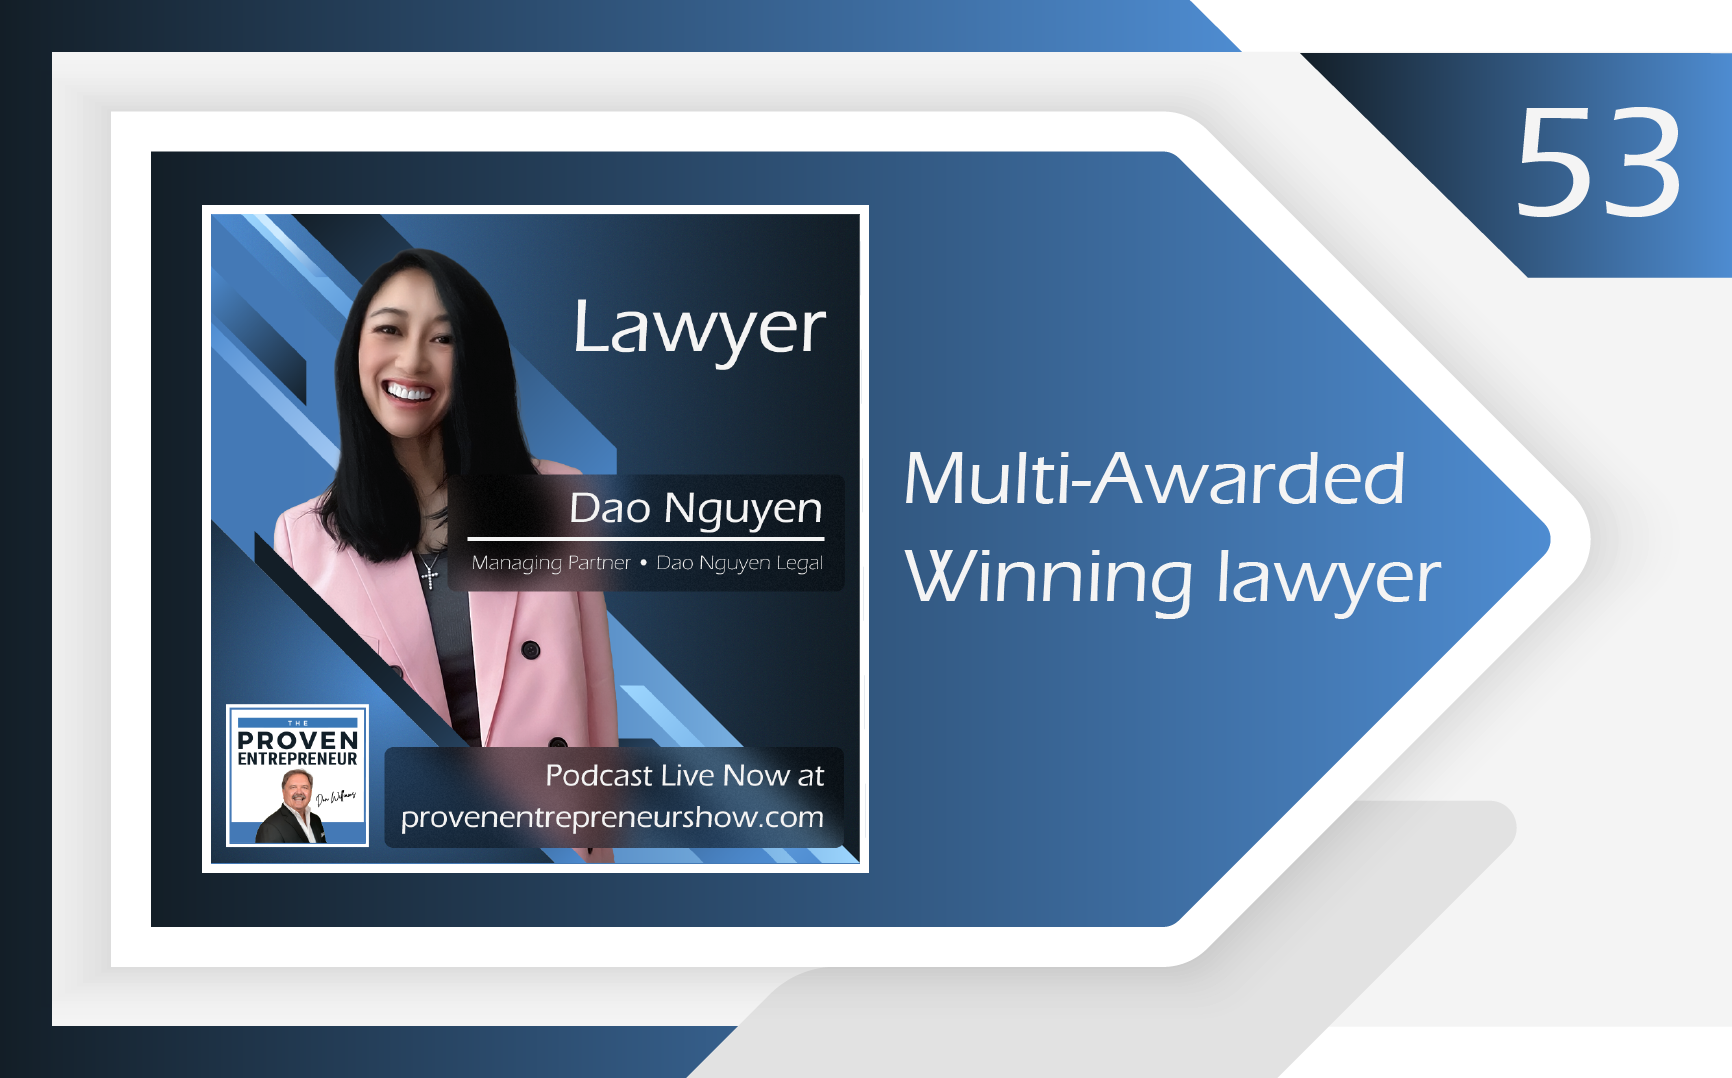 E53 | Global Citizen, Attorney & Entrepreneur Dao Nguyen Shares Her Success Story